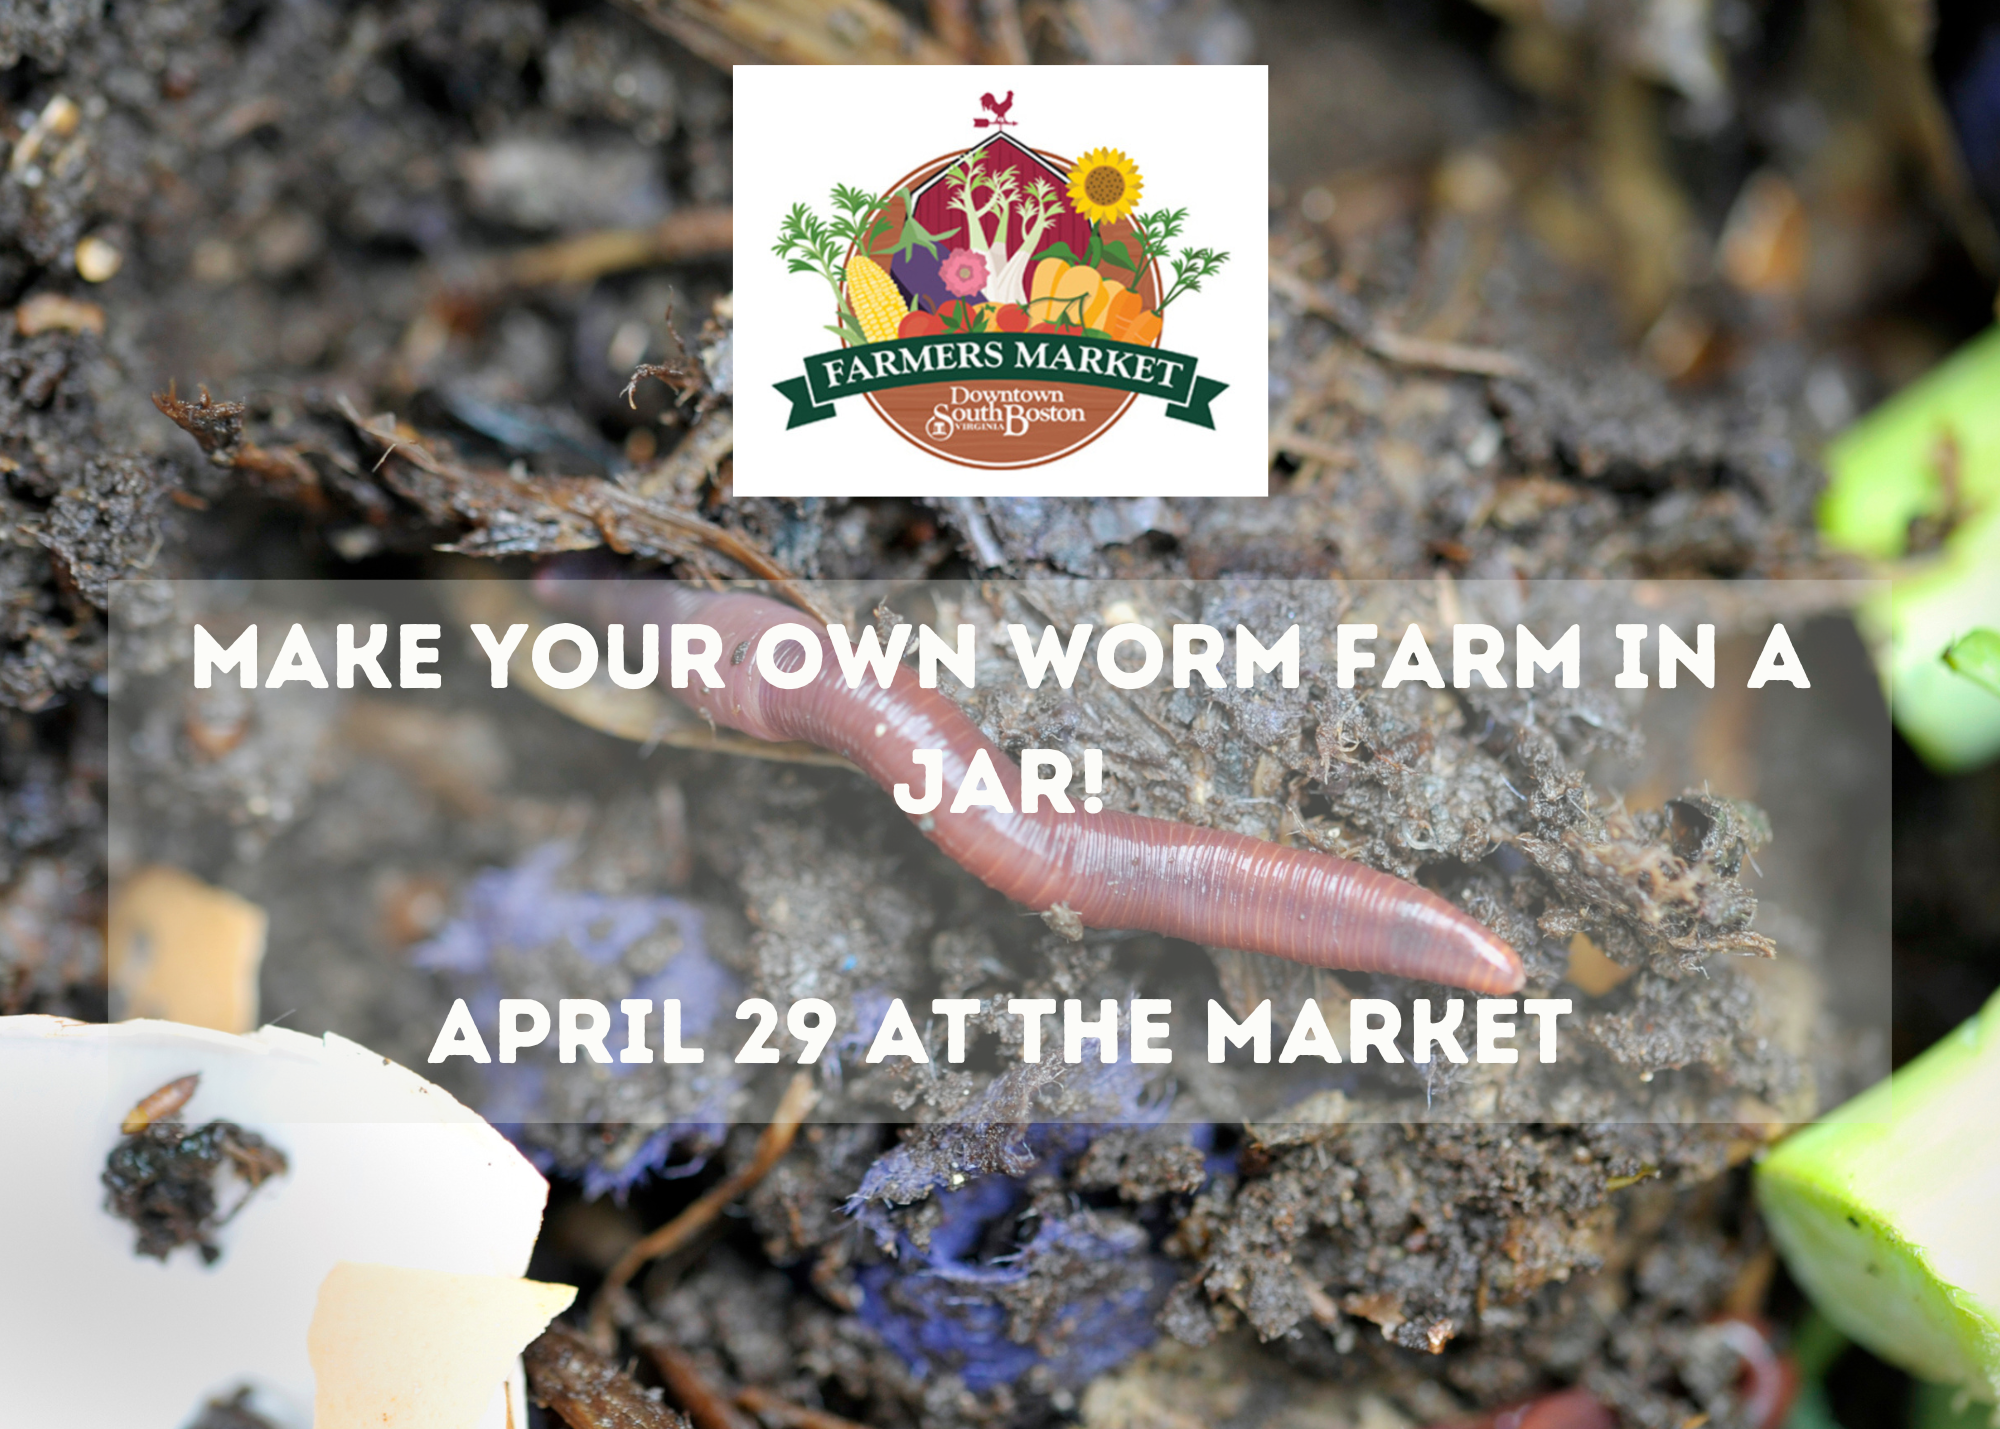 Make Your Worm Farm in a Jar